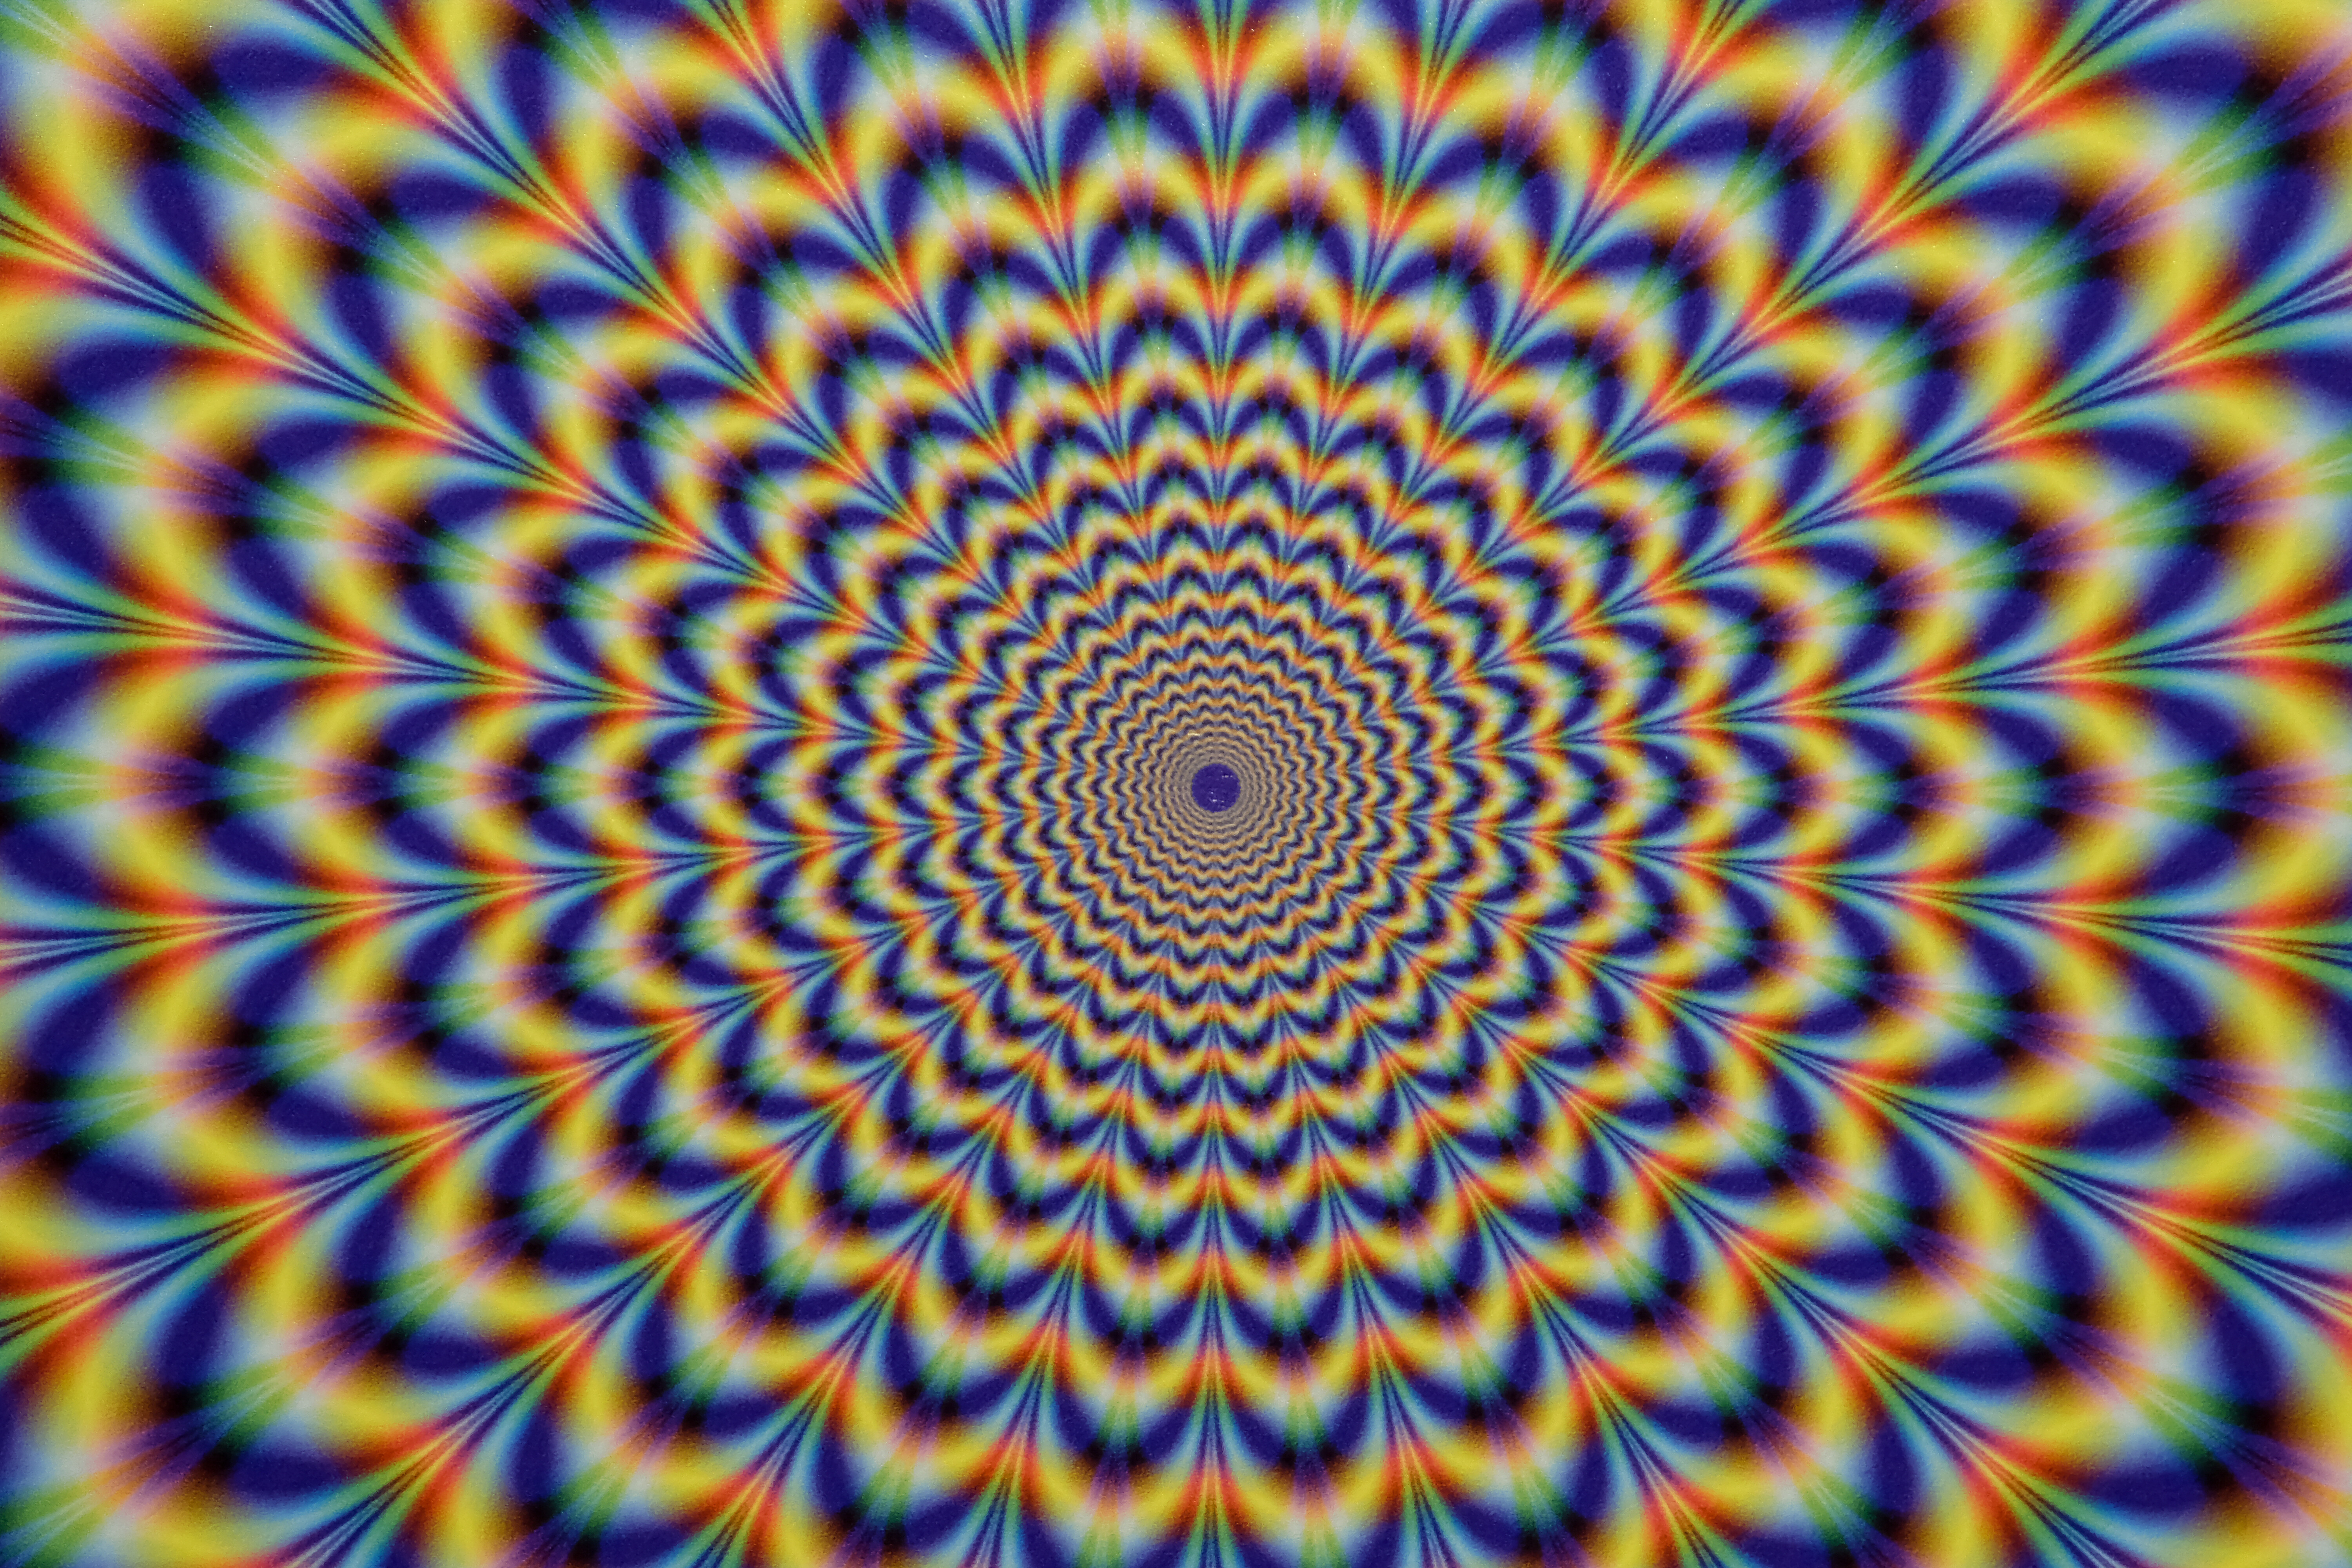 8k Illusion Images